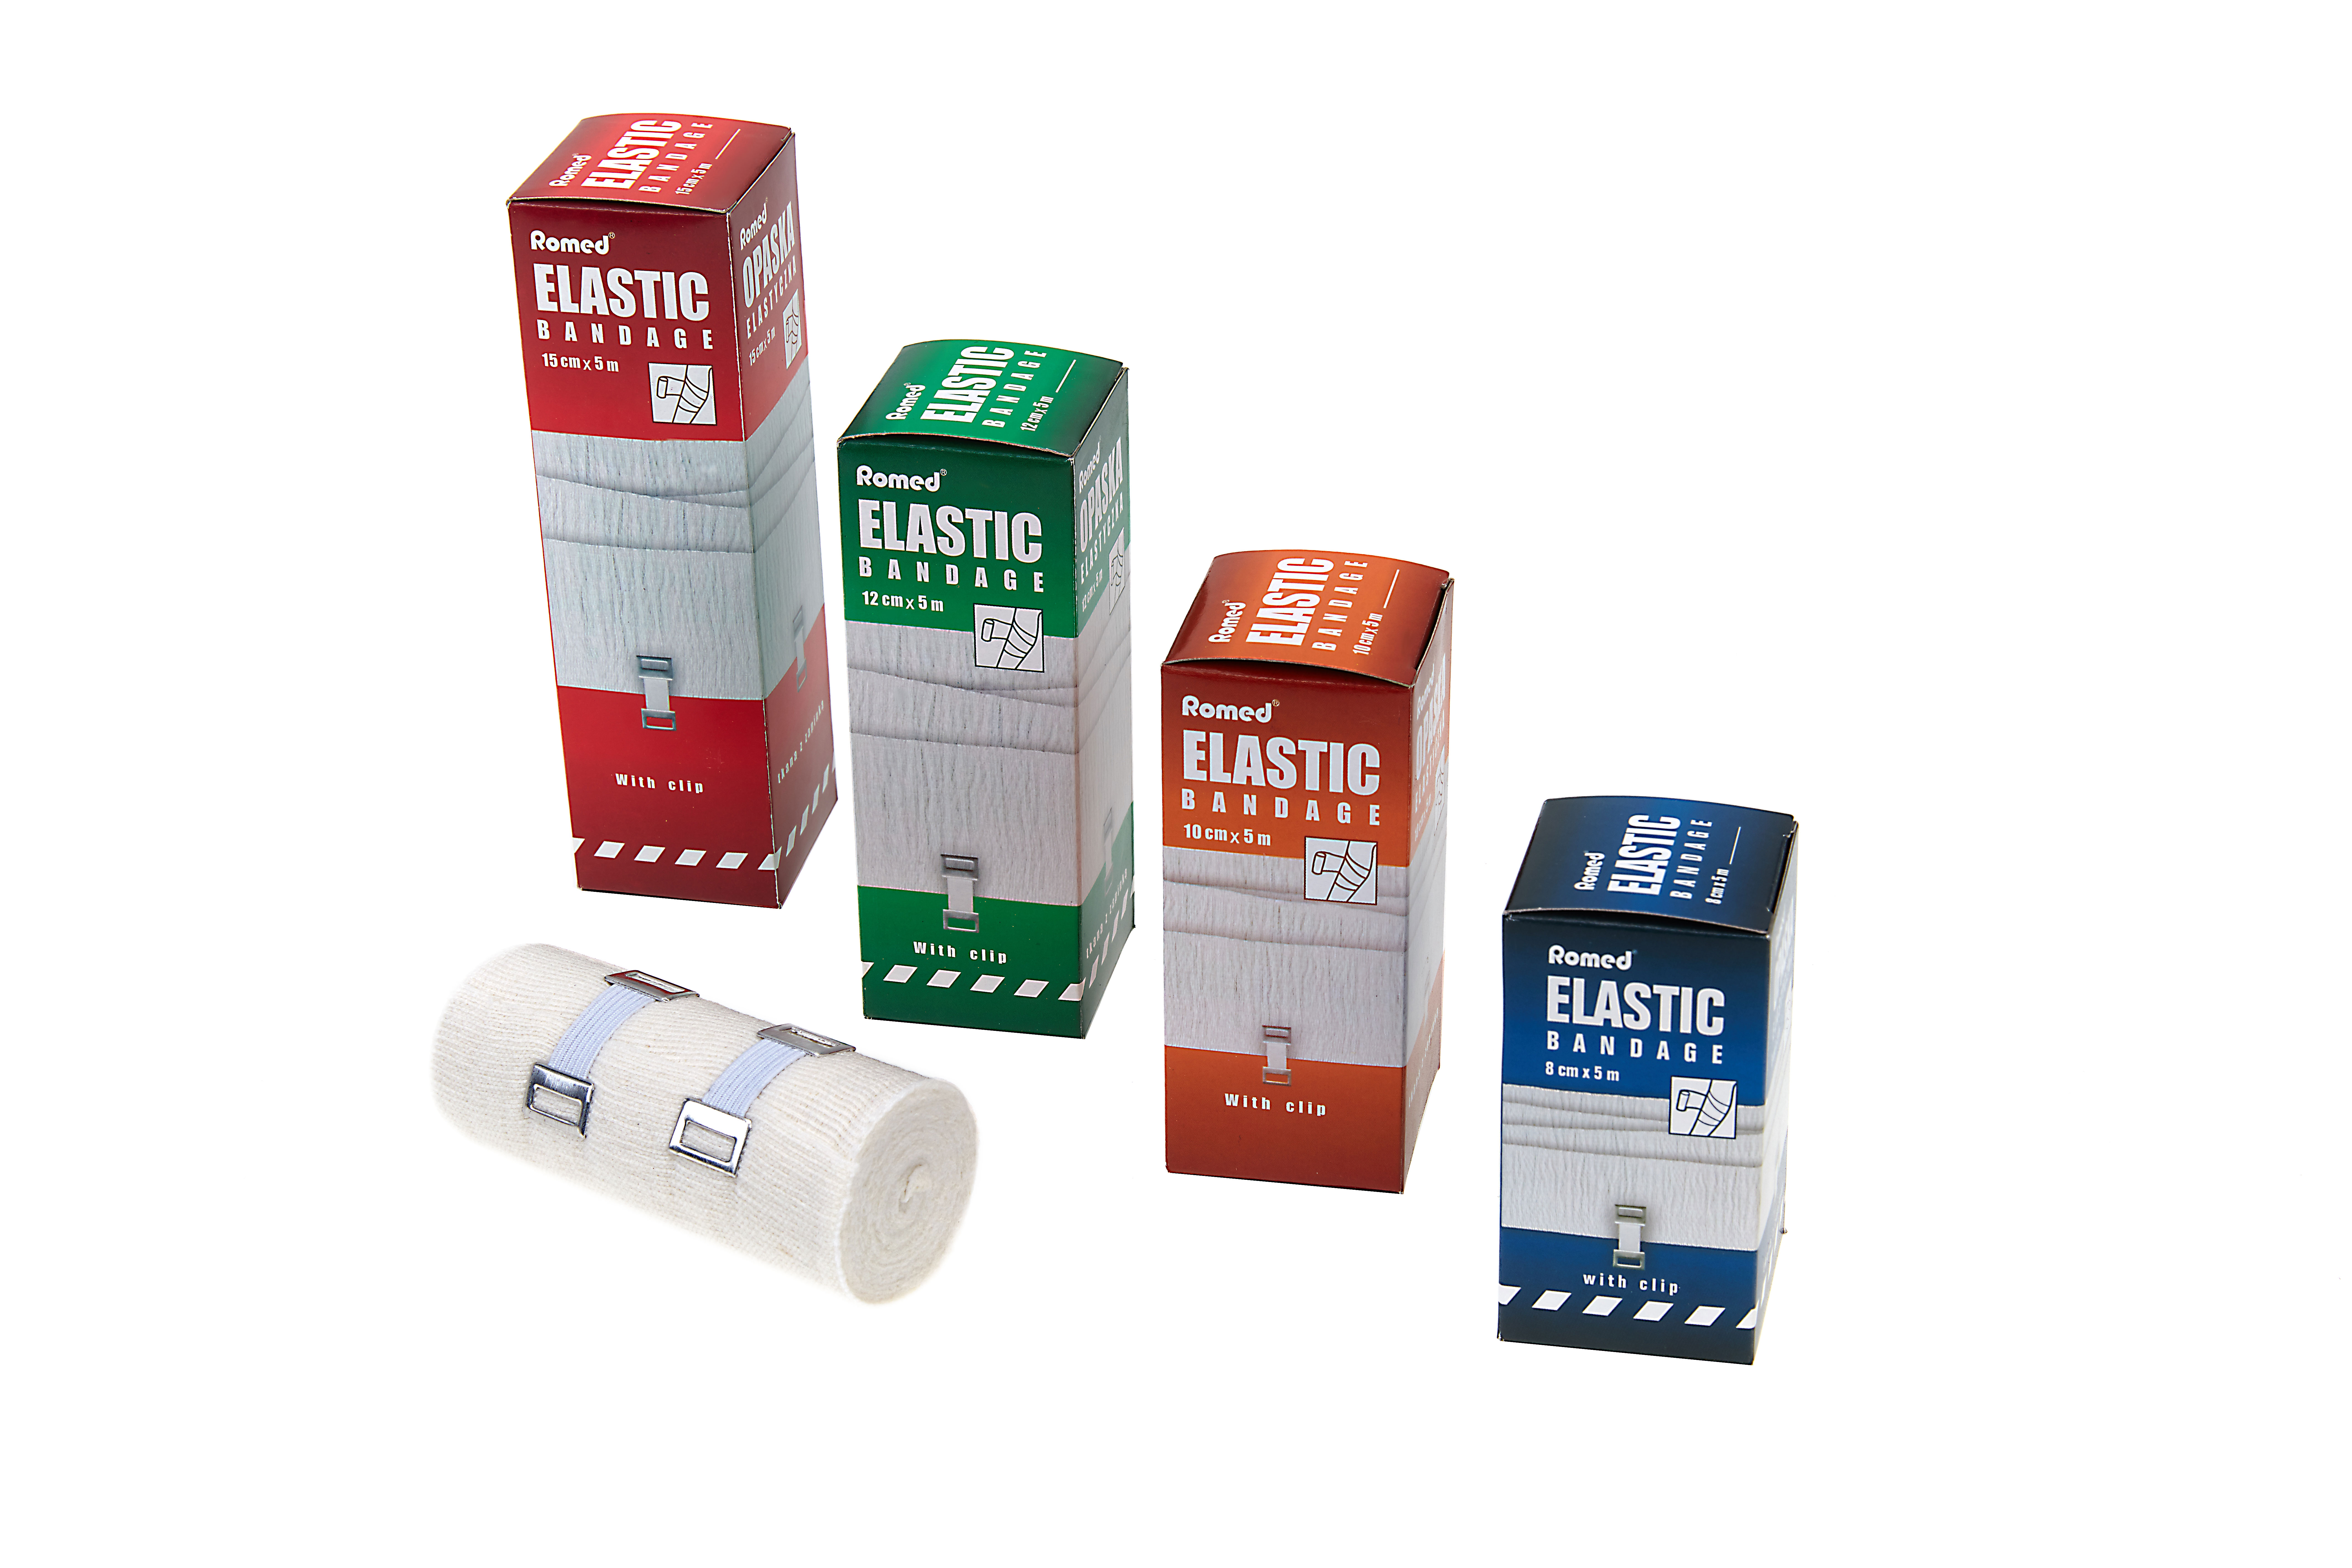 Elastic bandages